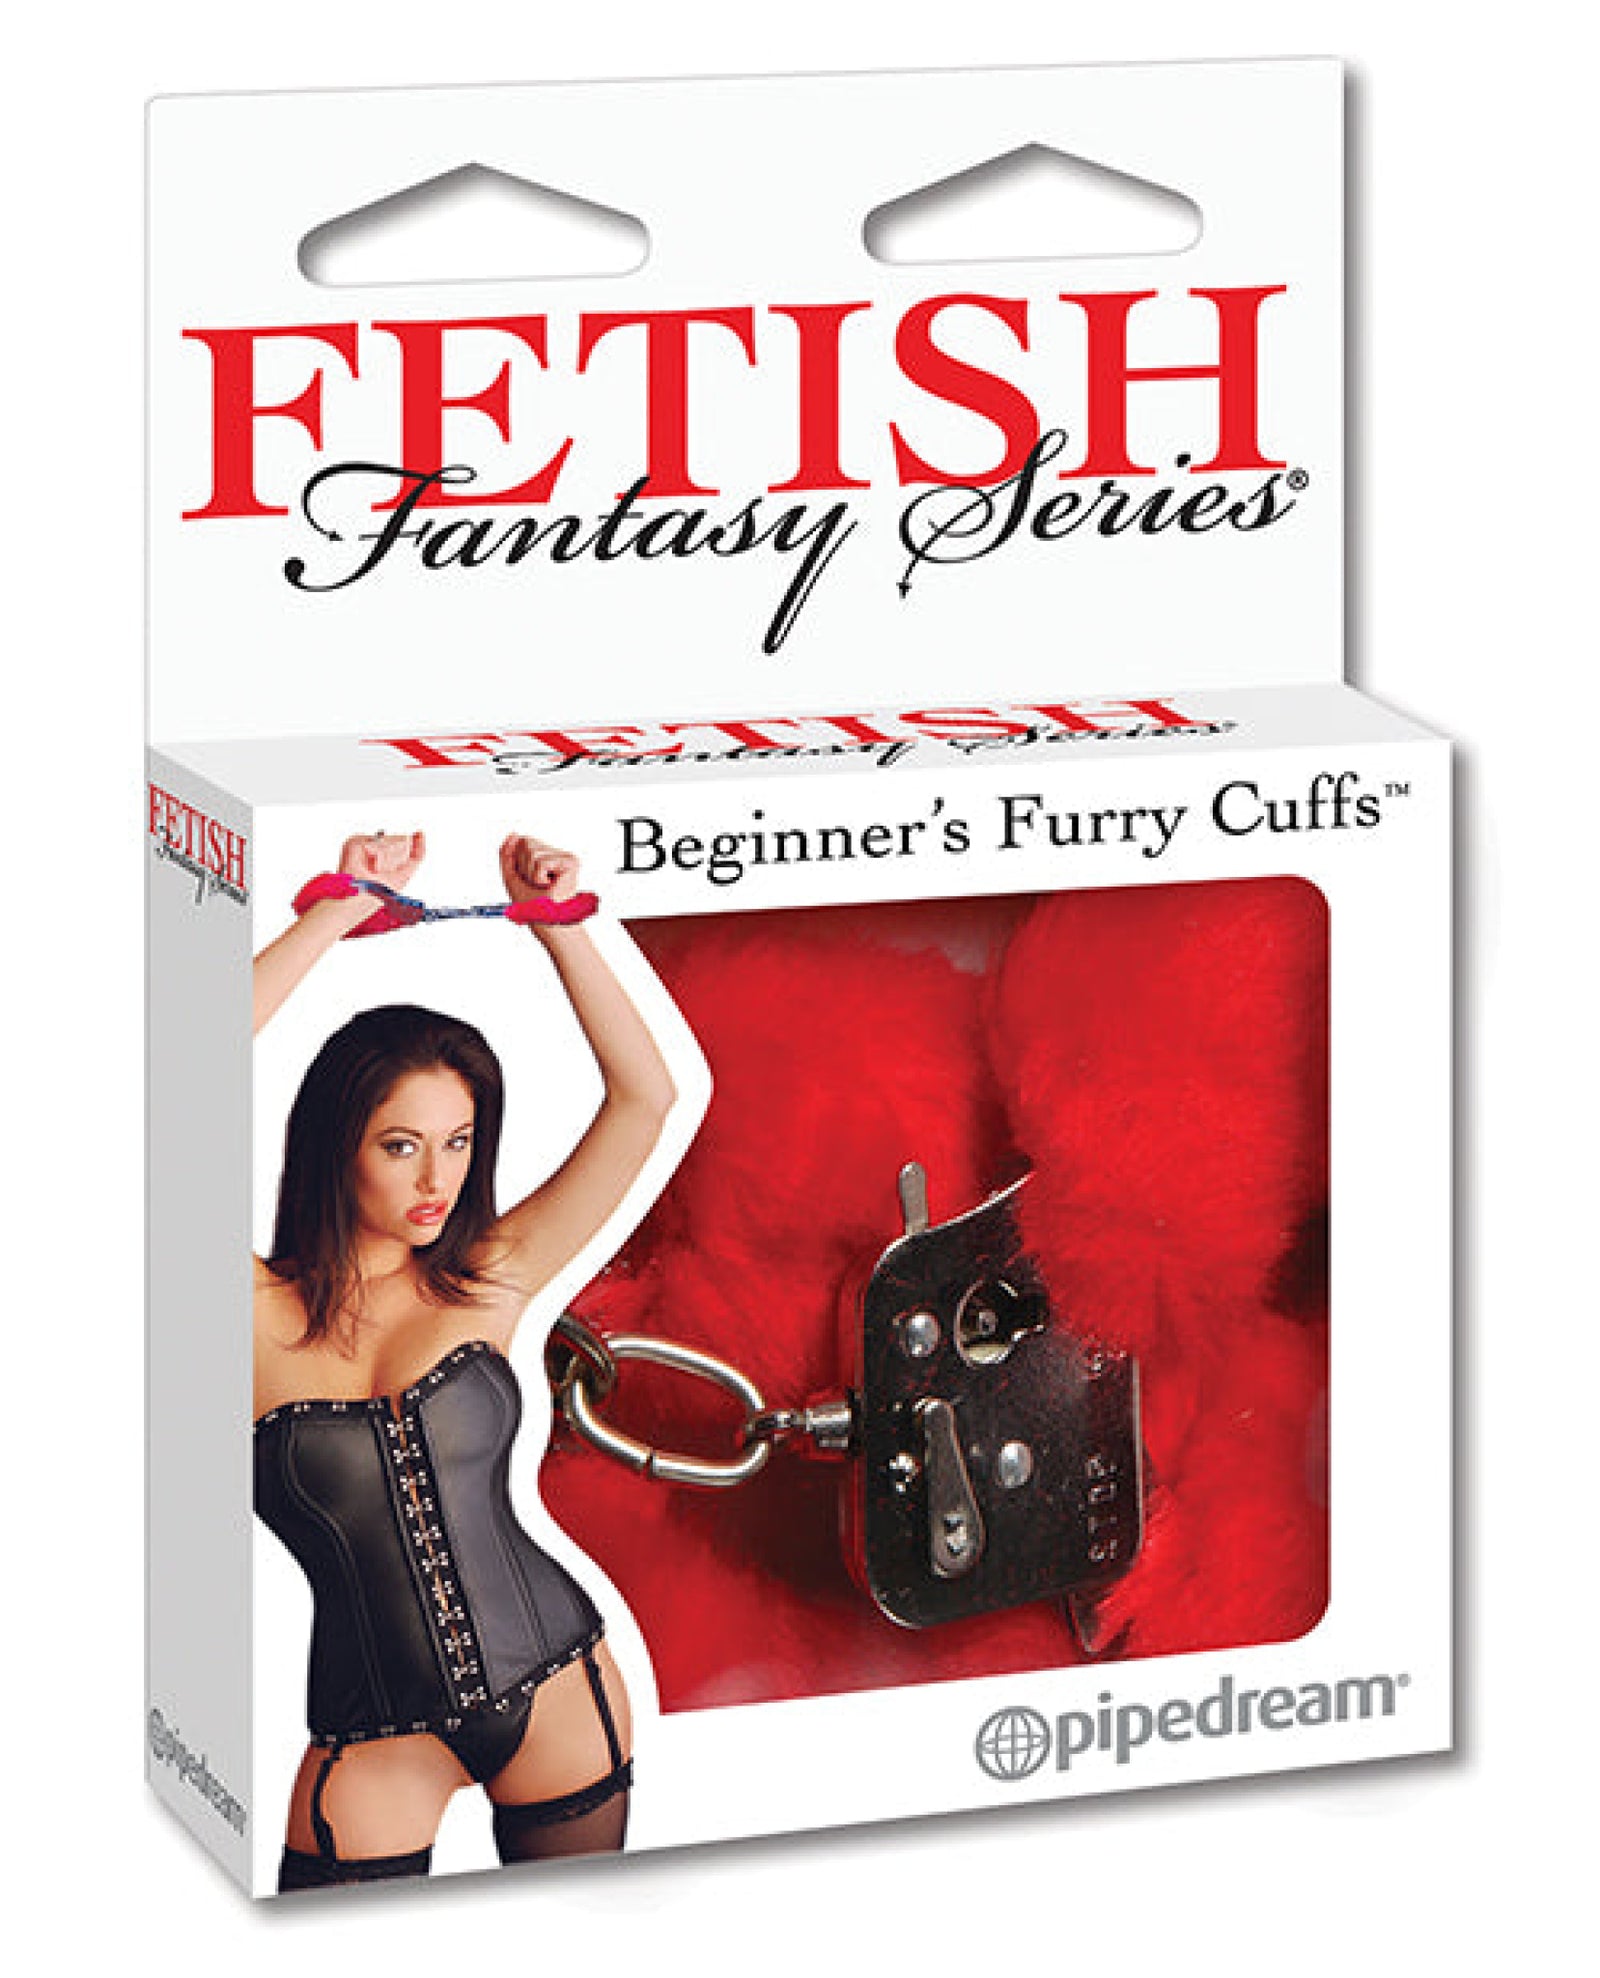 Fetish Fantasy Series Beginner's Furry Cuffs - Red Pipedream®